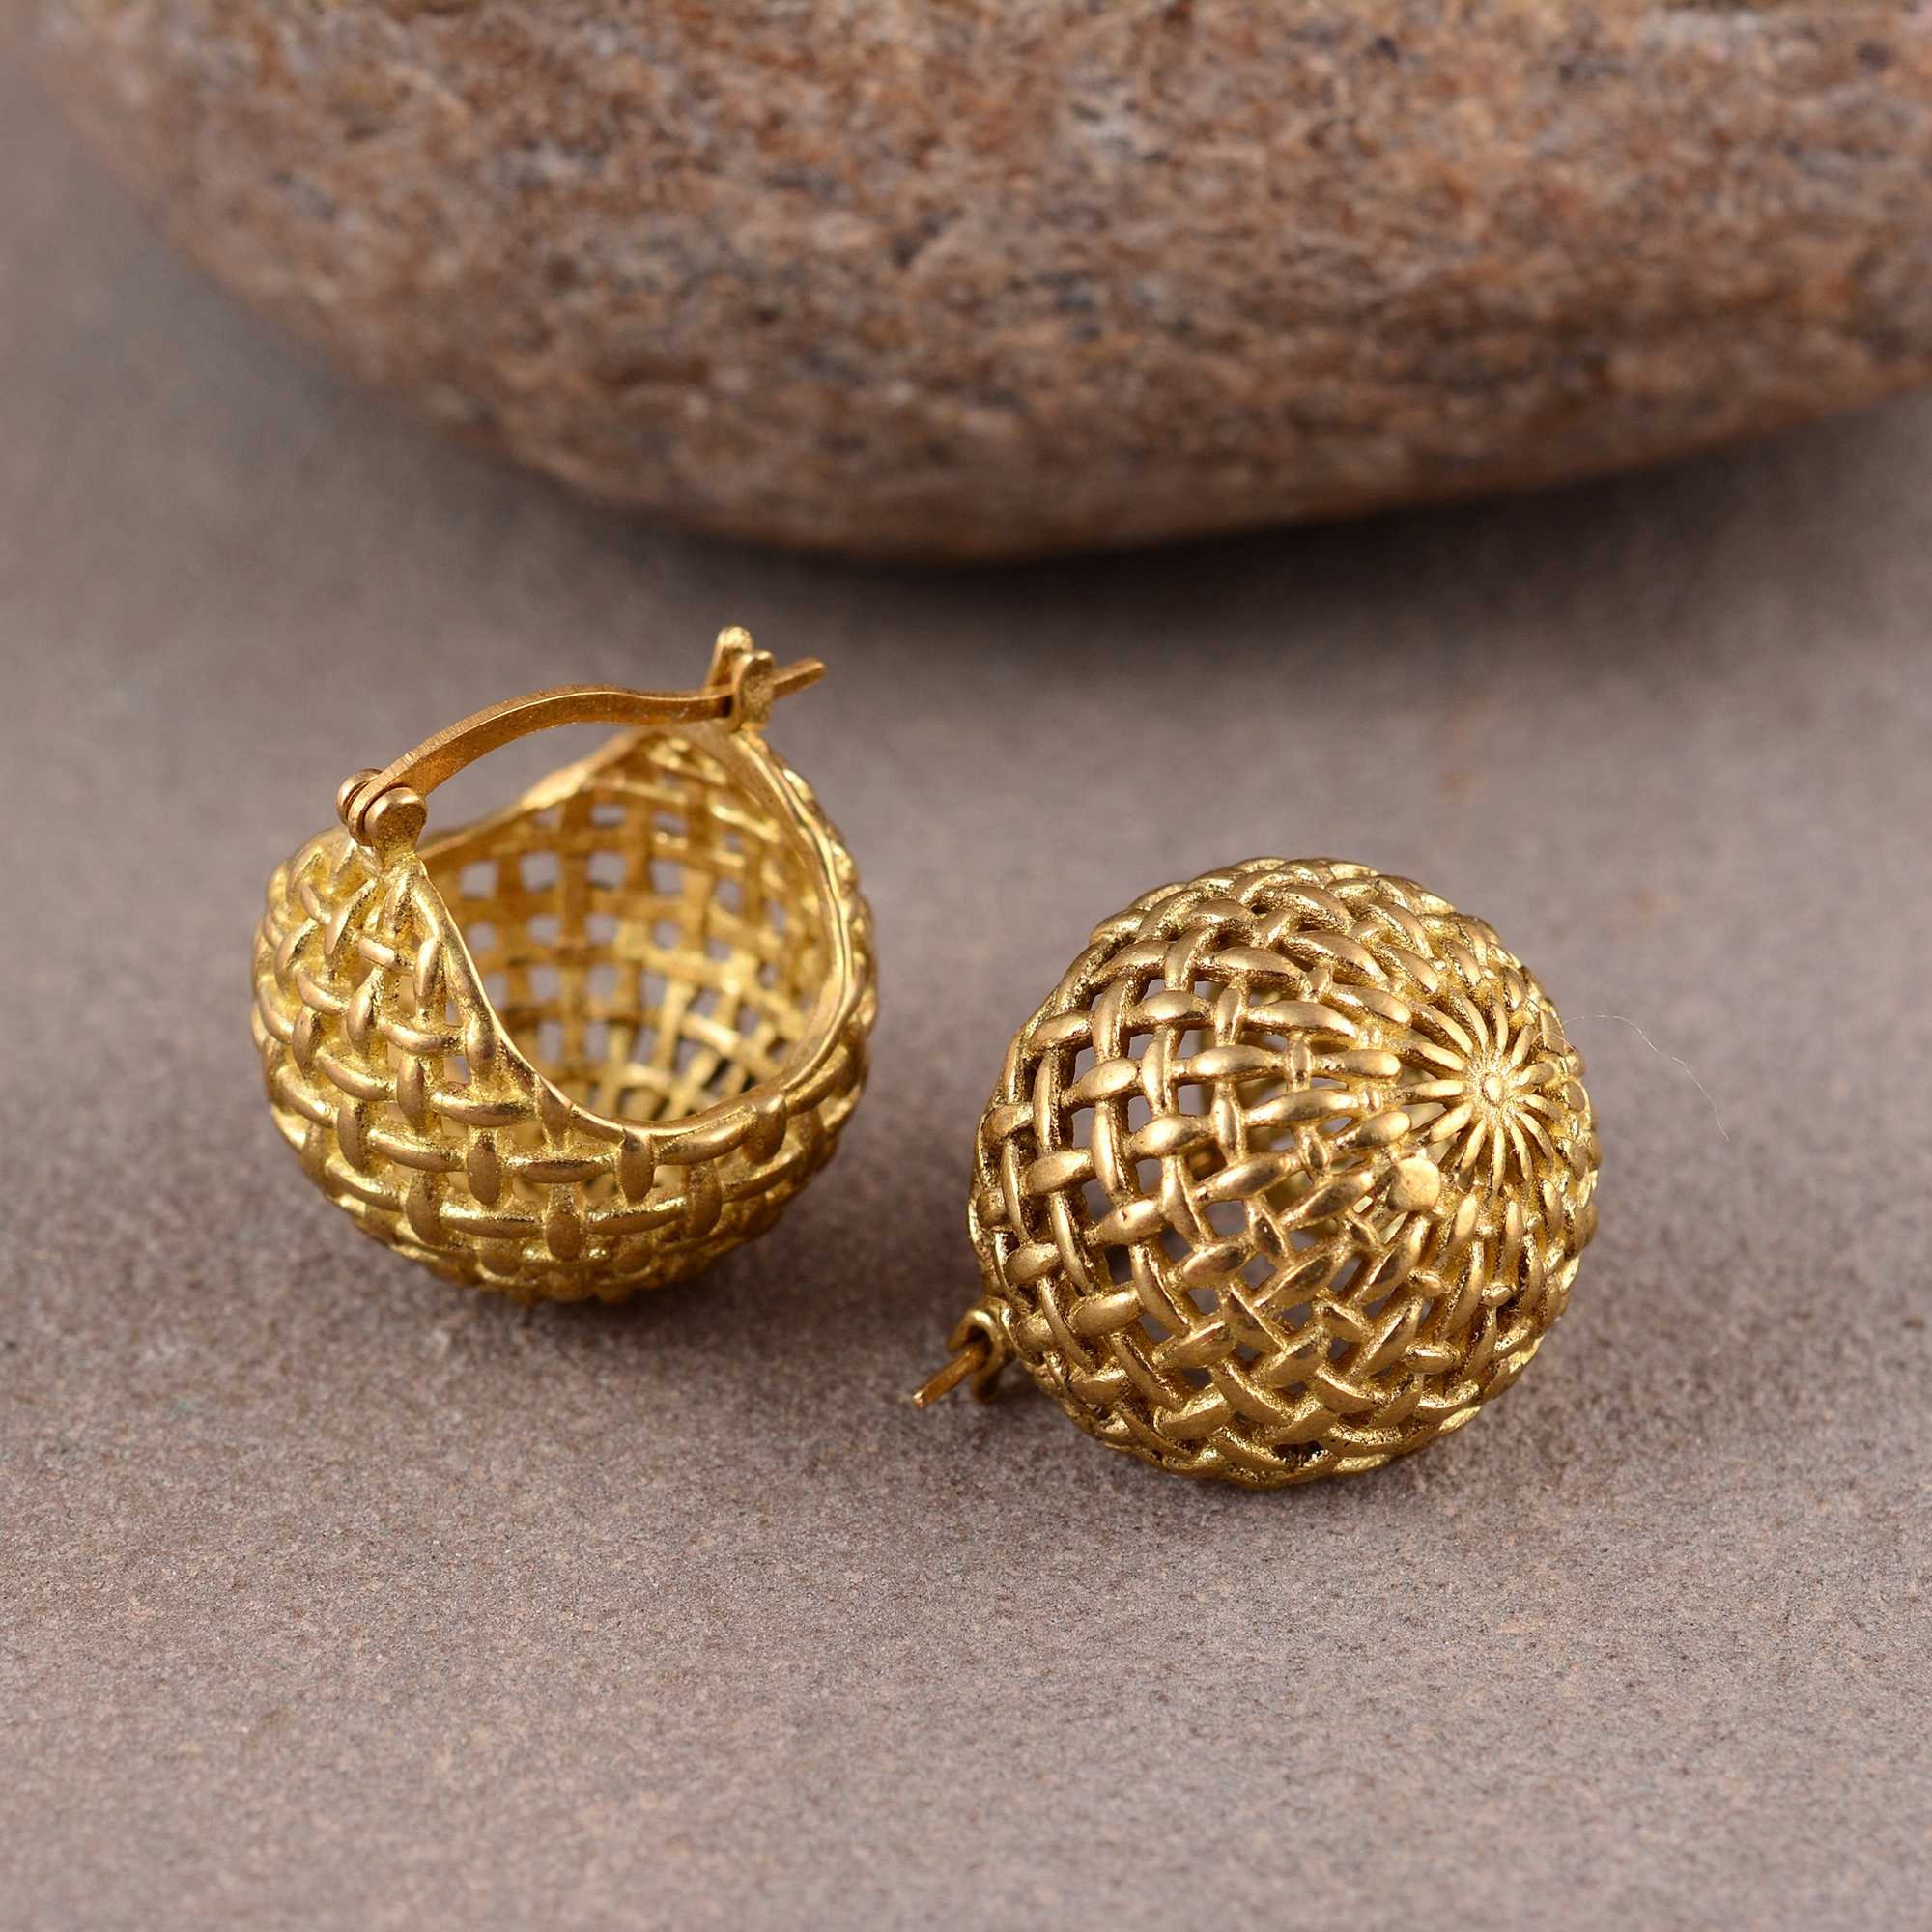 Elegant Small Size Jhumka Earrings Gold Polished Jewellery Designs J25126 |  Jhumka earrings, Jewelry design, Polish jewelry